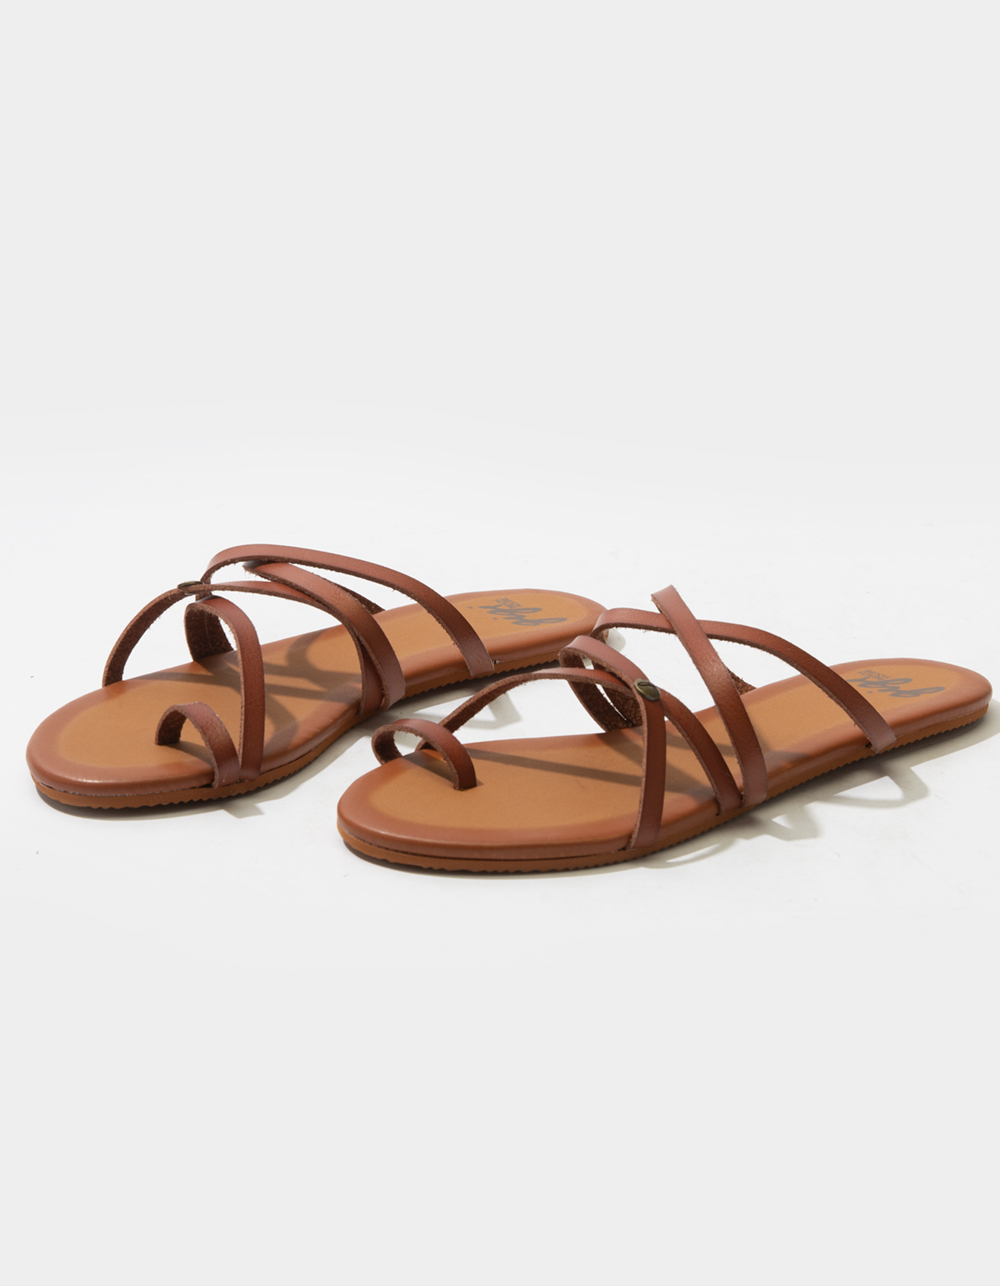 GIGI Athena Womens Sandals - COGNAC | Tillys